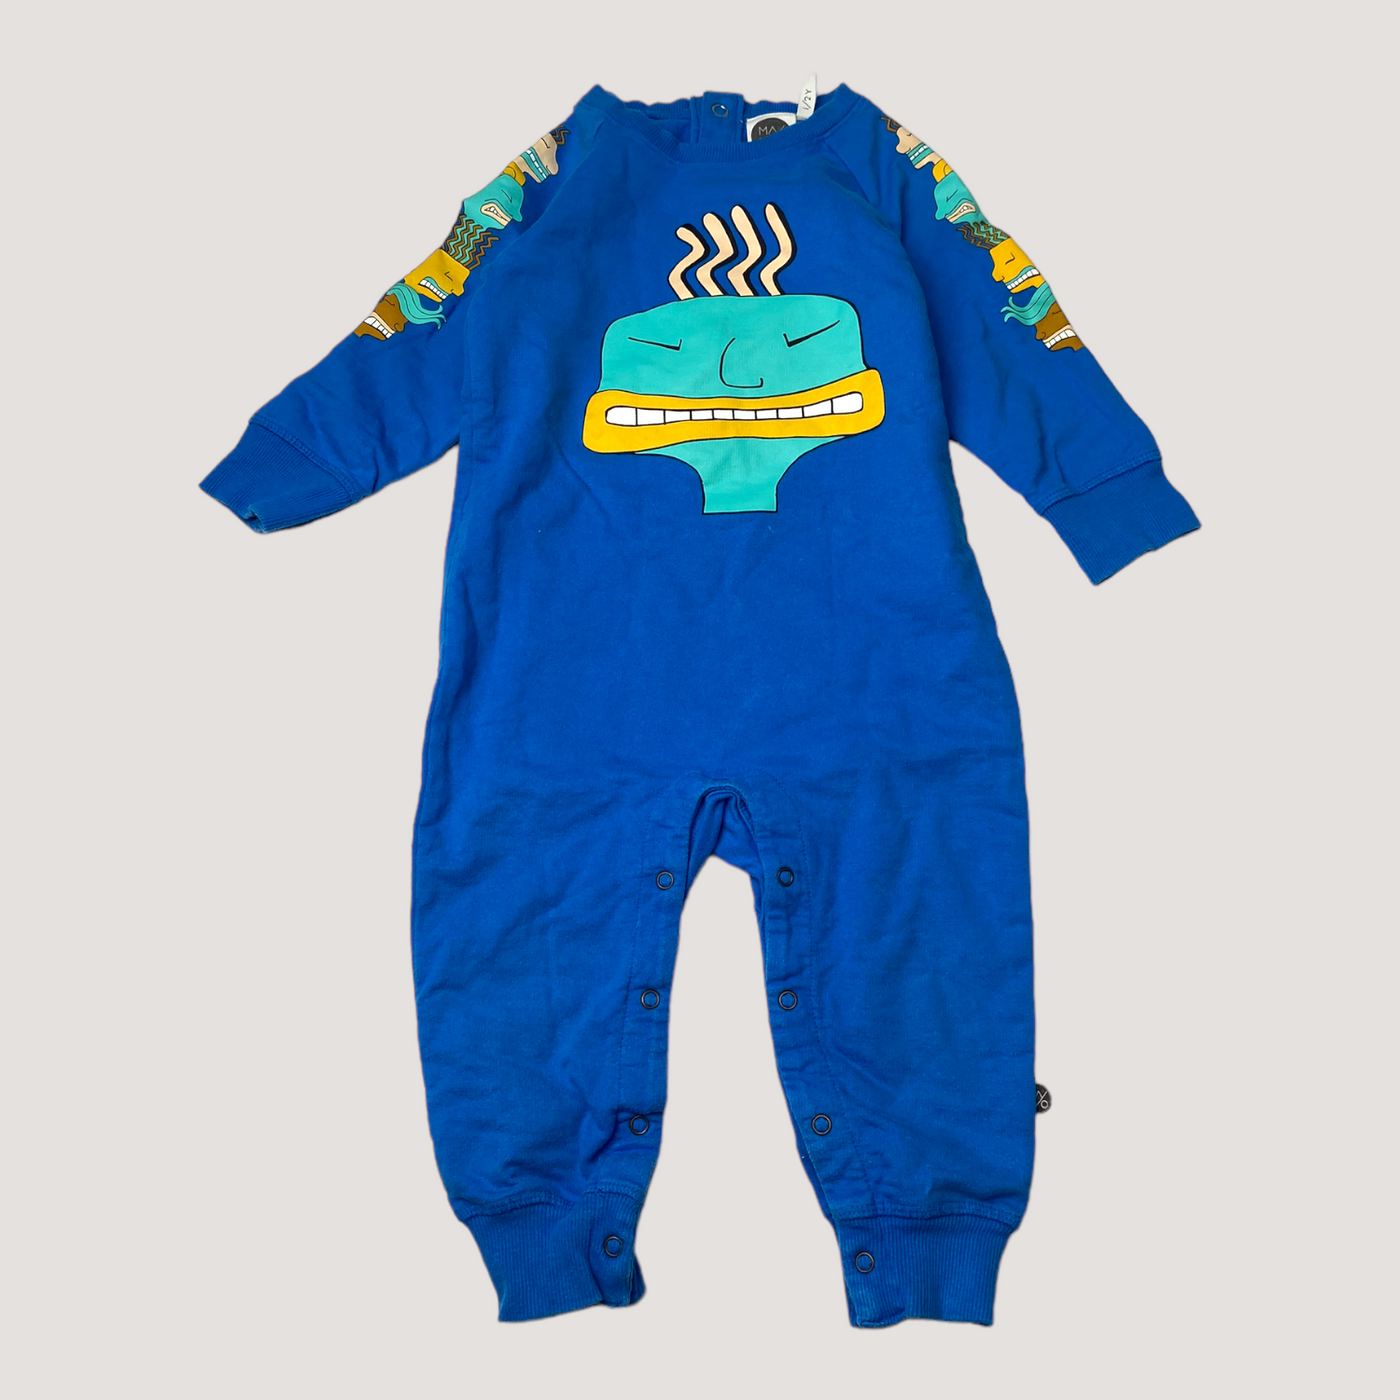 Mainio sweat jumpsuit, blue | 86/92cm